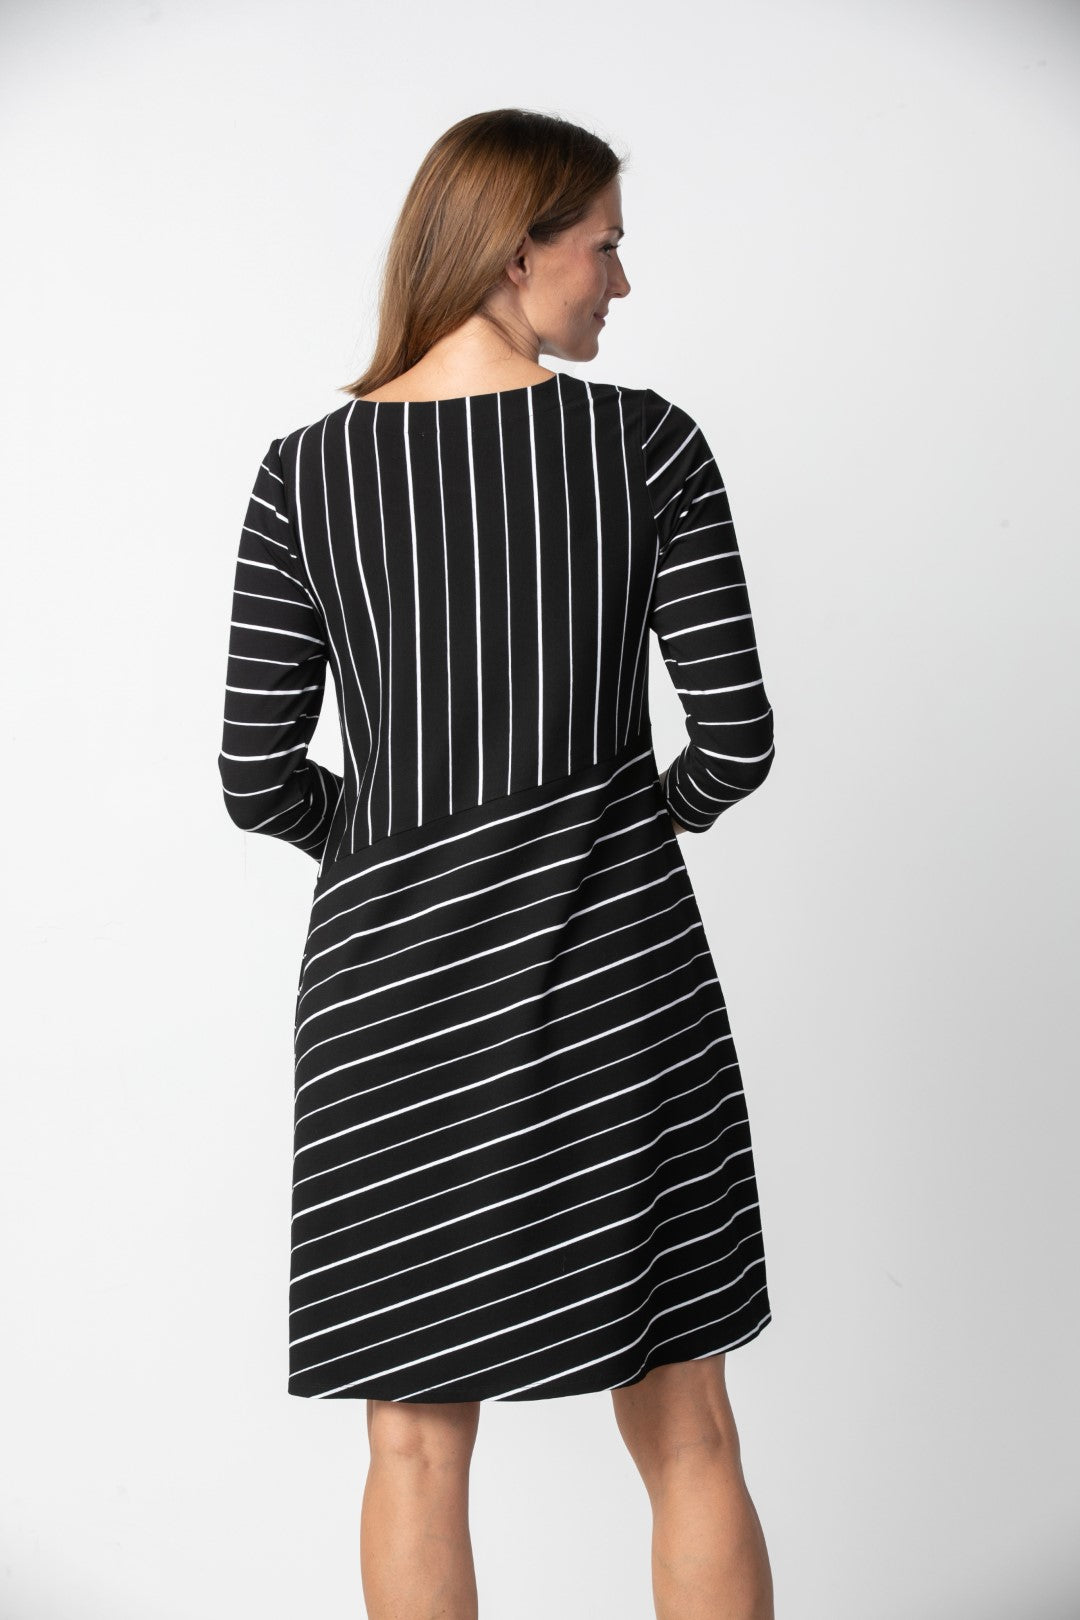 Soho Black Stripe Swing Dress